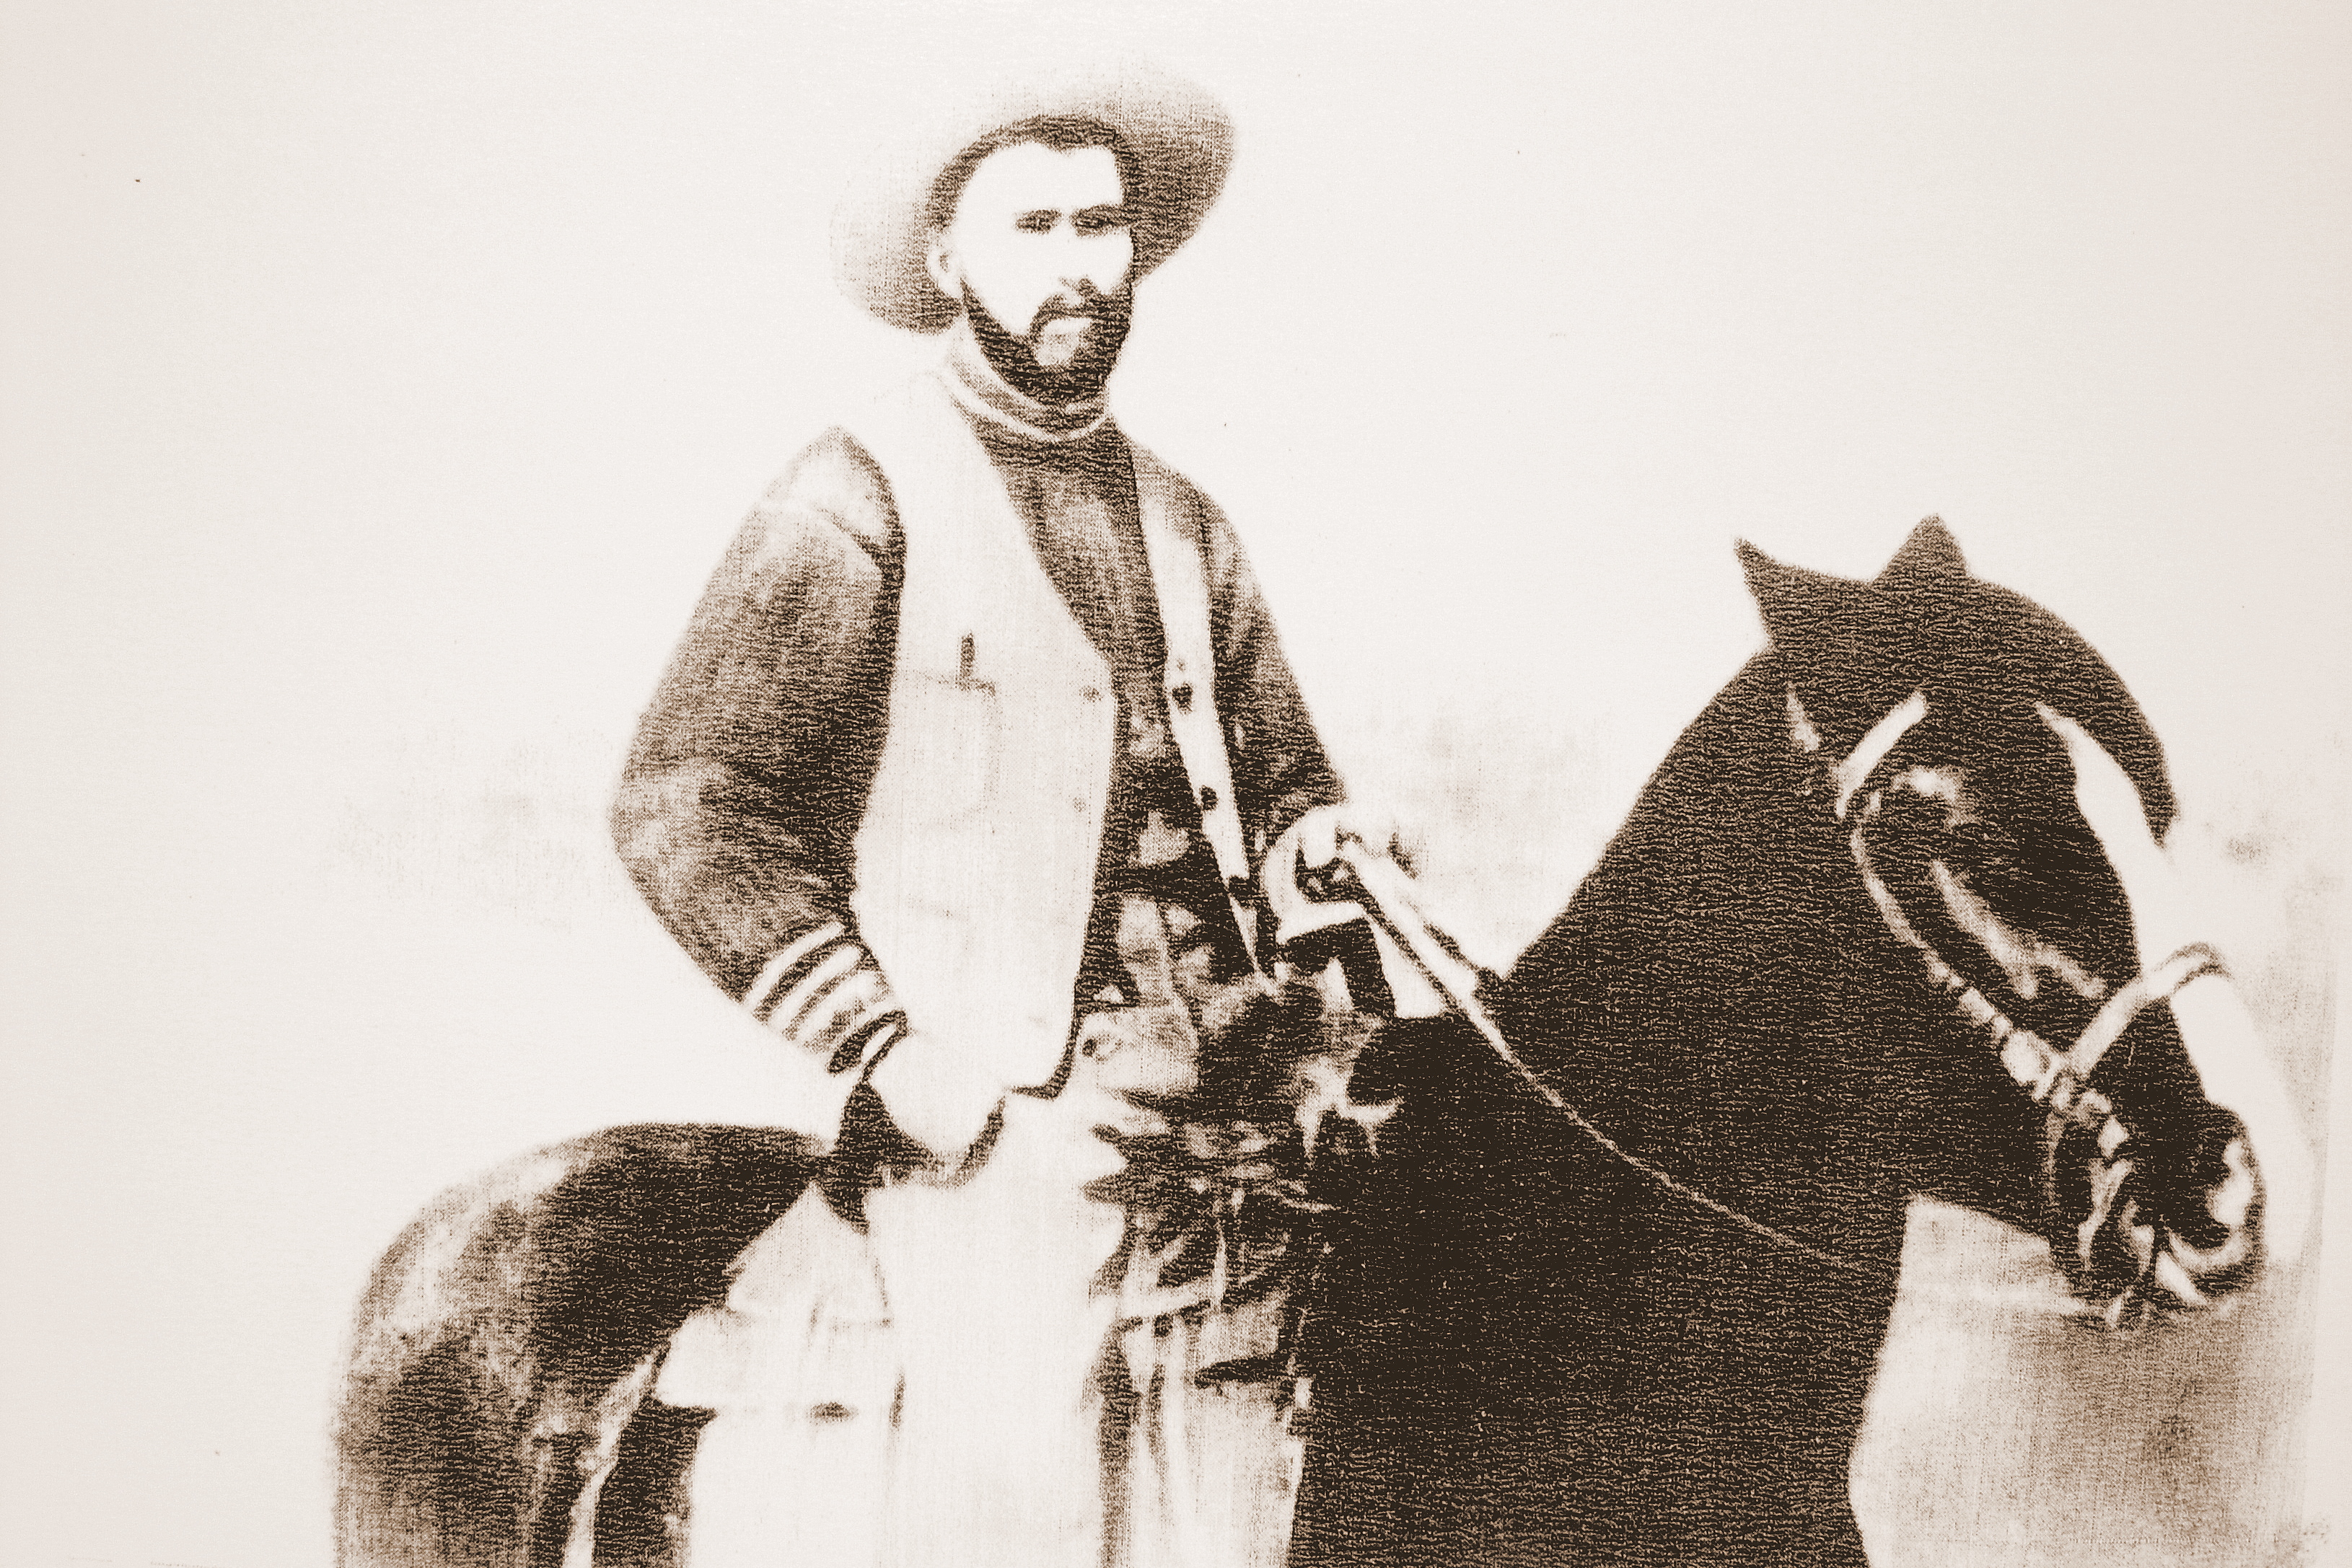 Pedro Trujillo on horseback